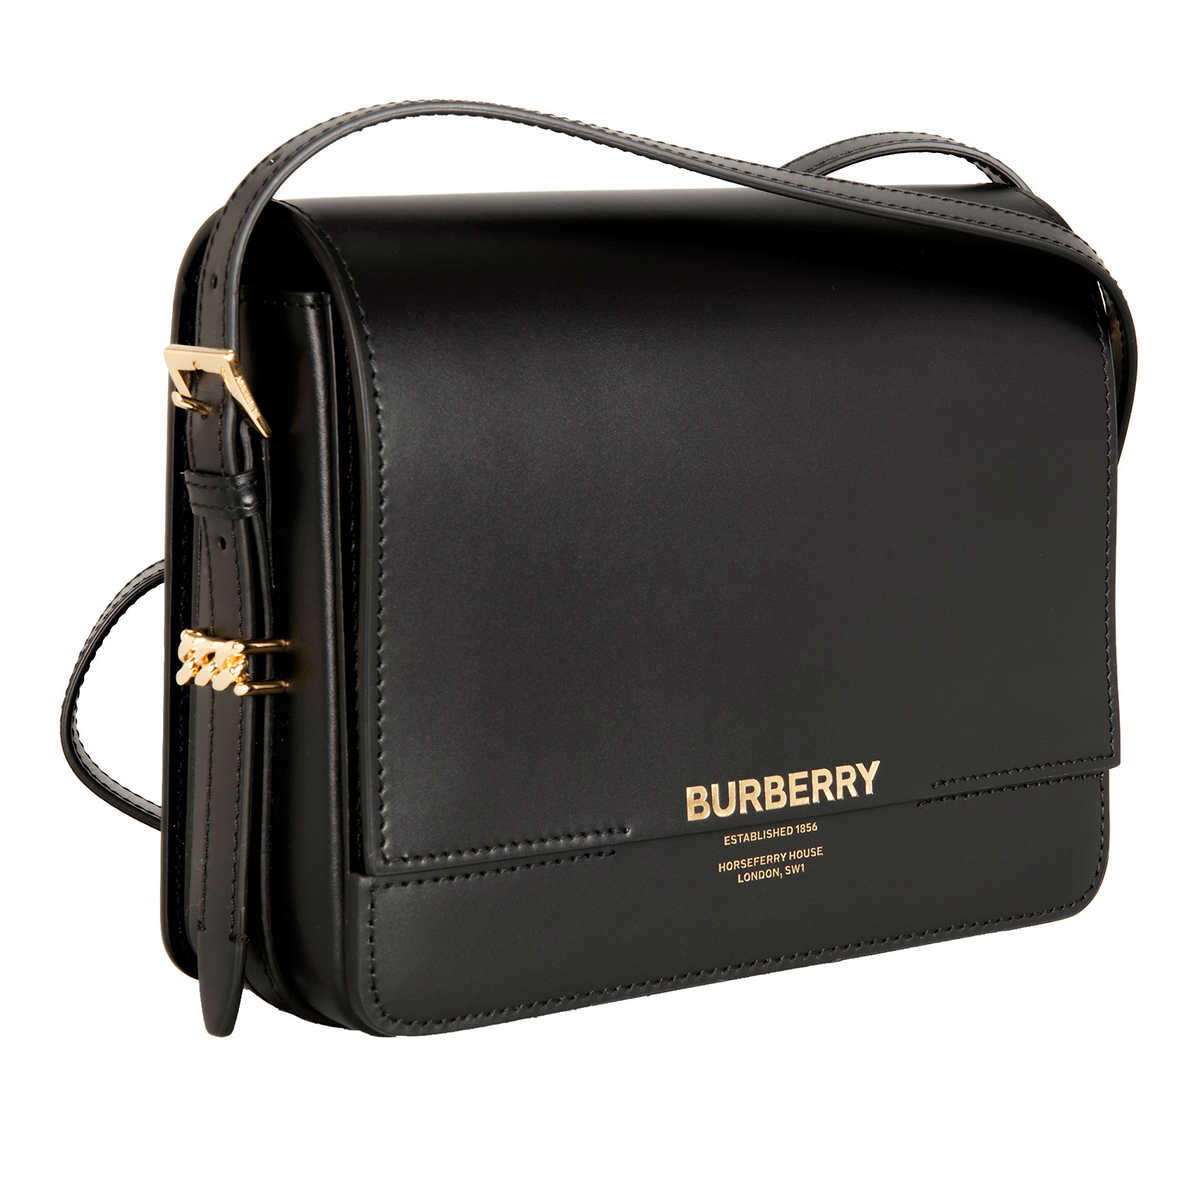 Burberry Purse  Burberry purse, Soft leather bag, Leather